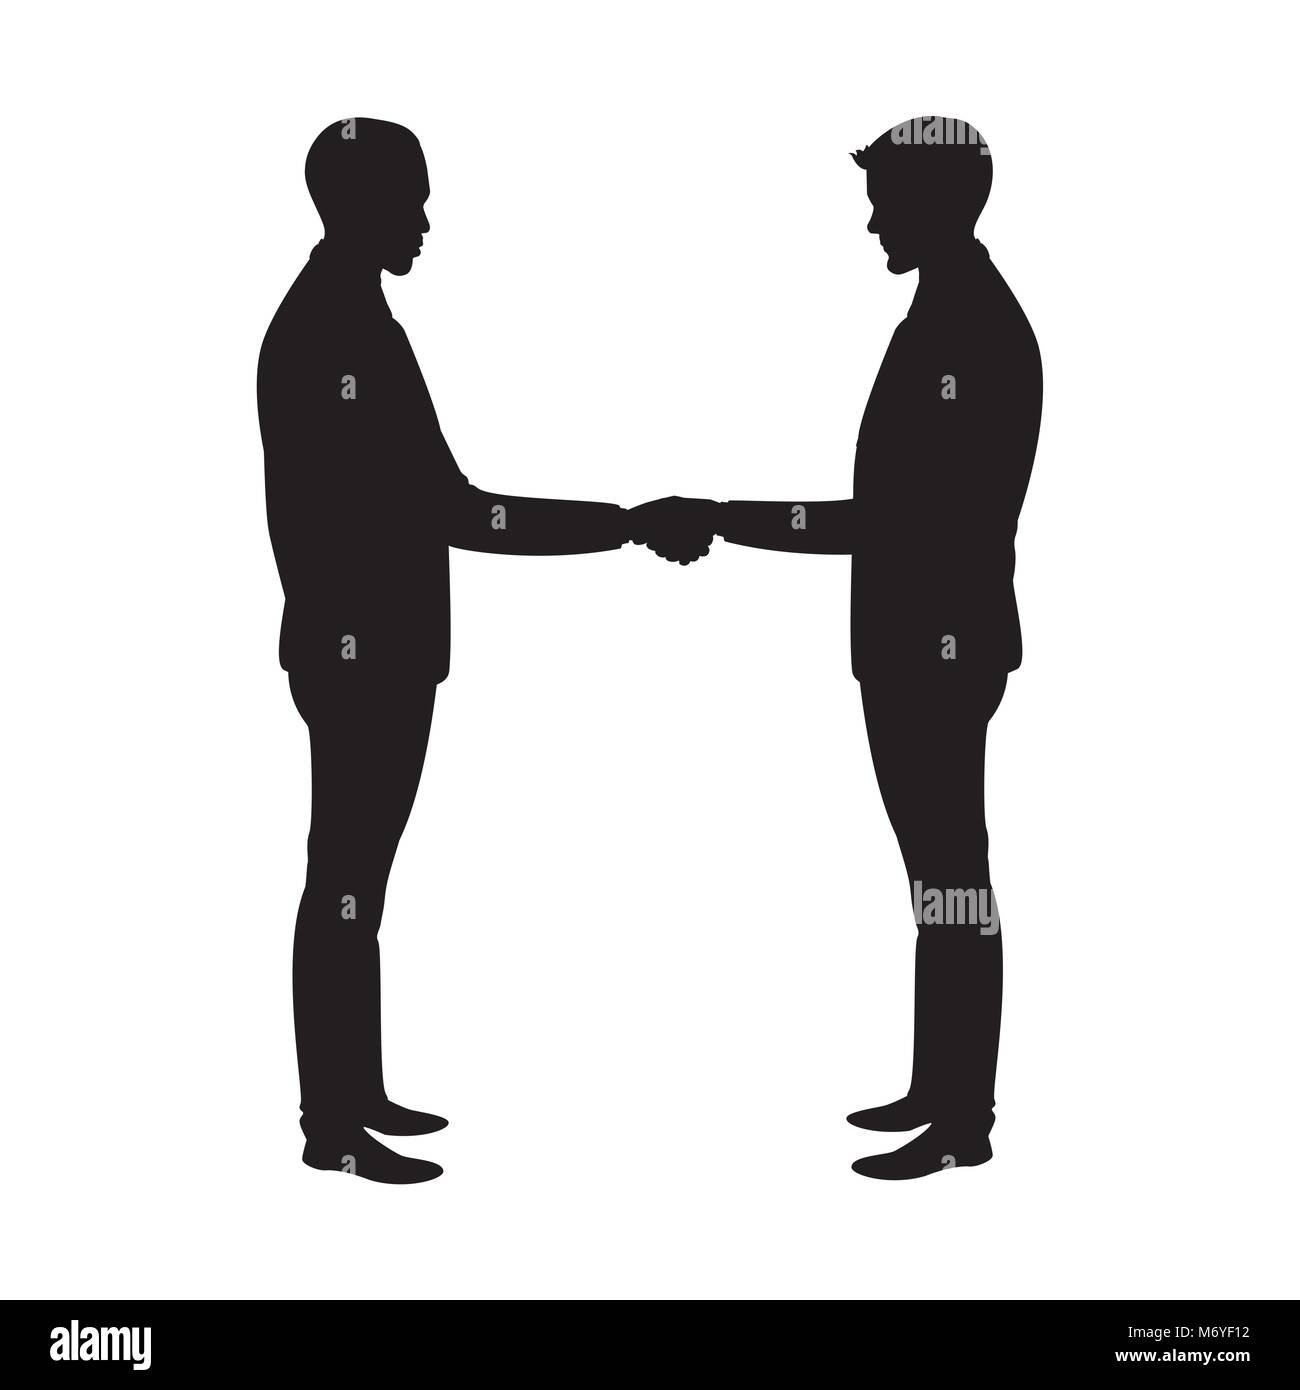 Business handshake silhouette, isolated on white,stock vector illustration Stock Vector